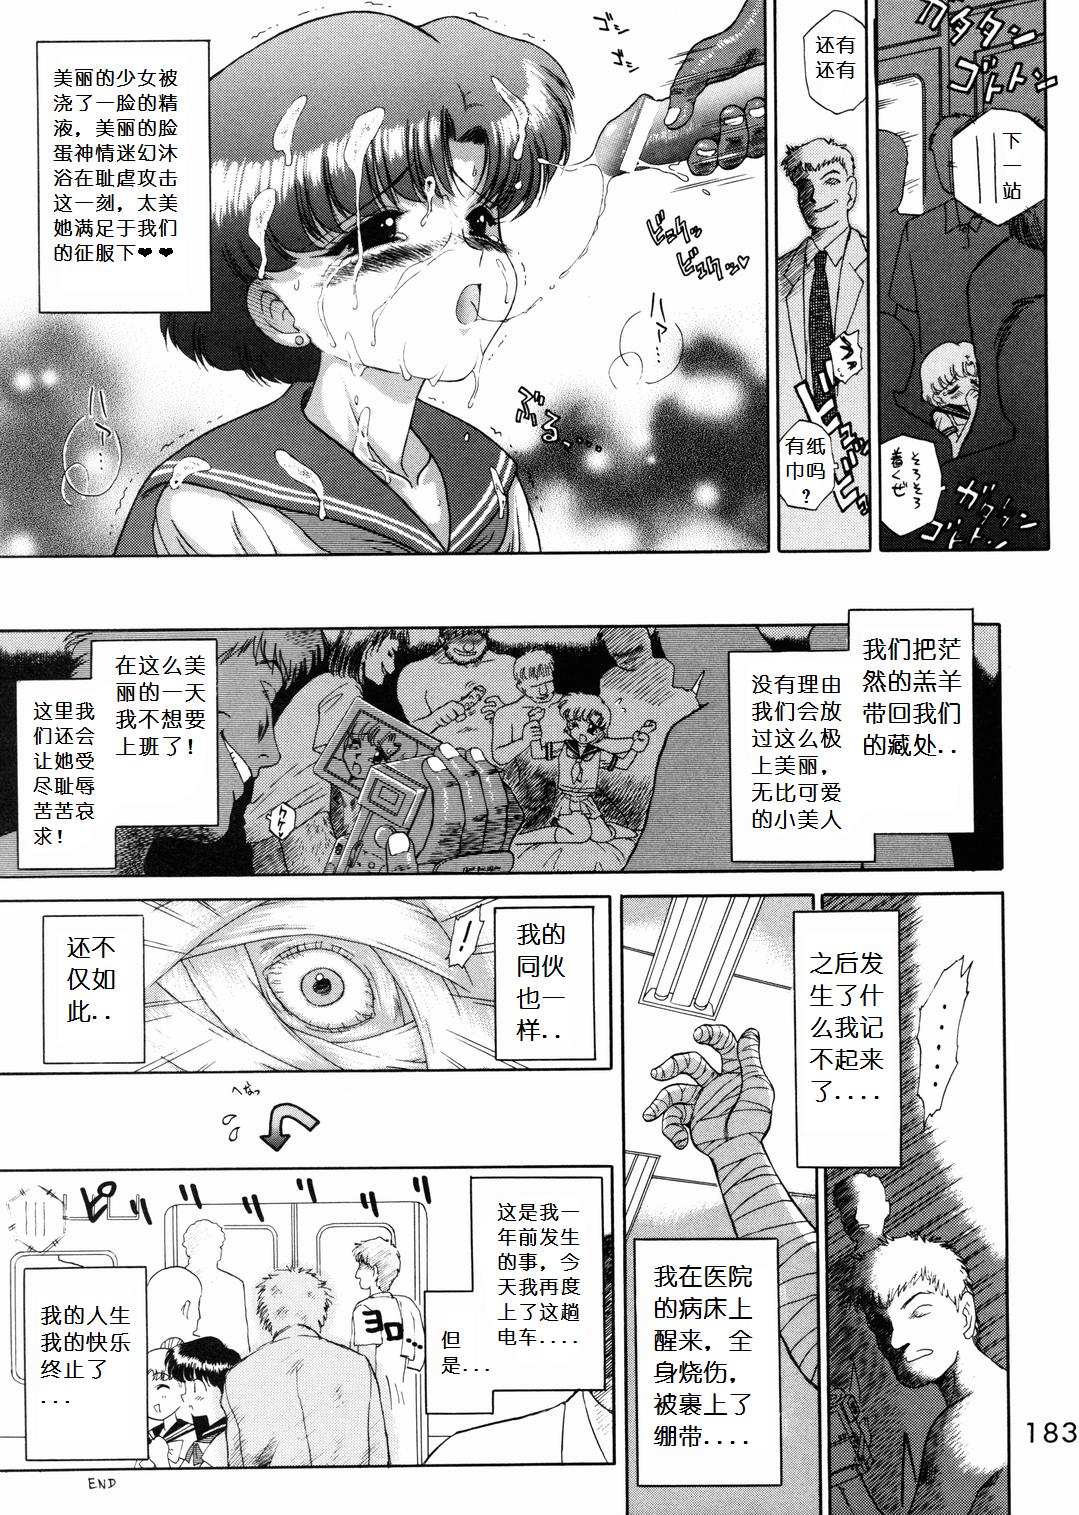 Bukkake talking head and judgement - Sailor moon Clip - Page 12